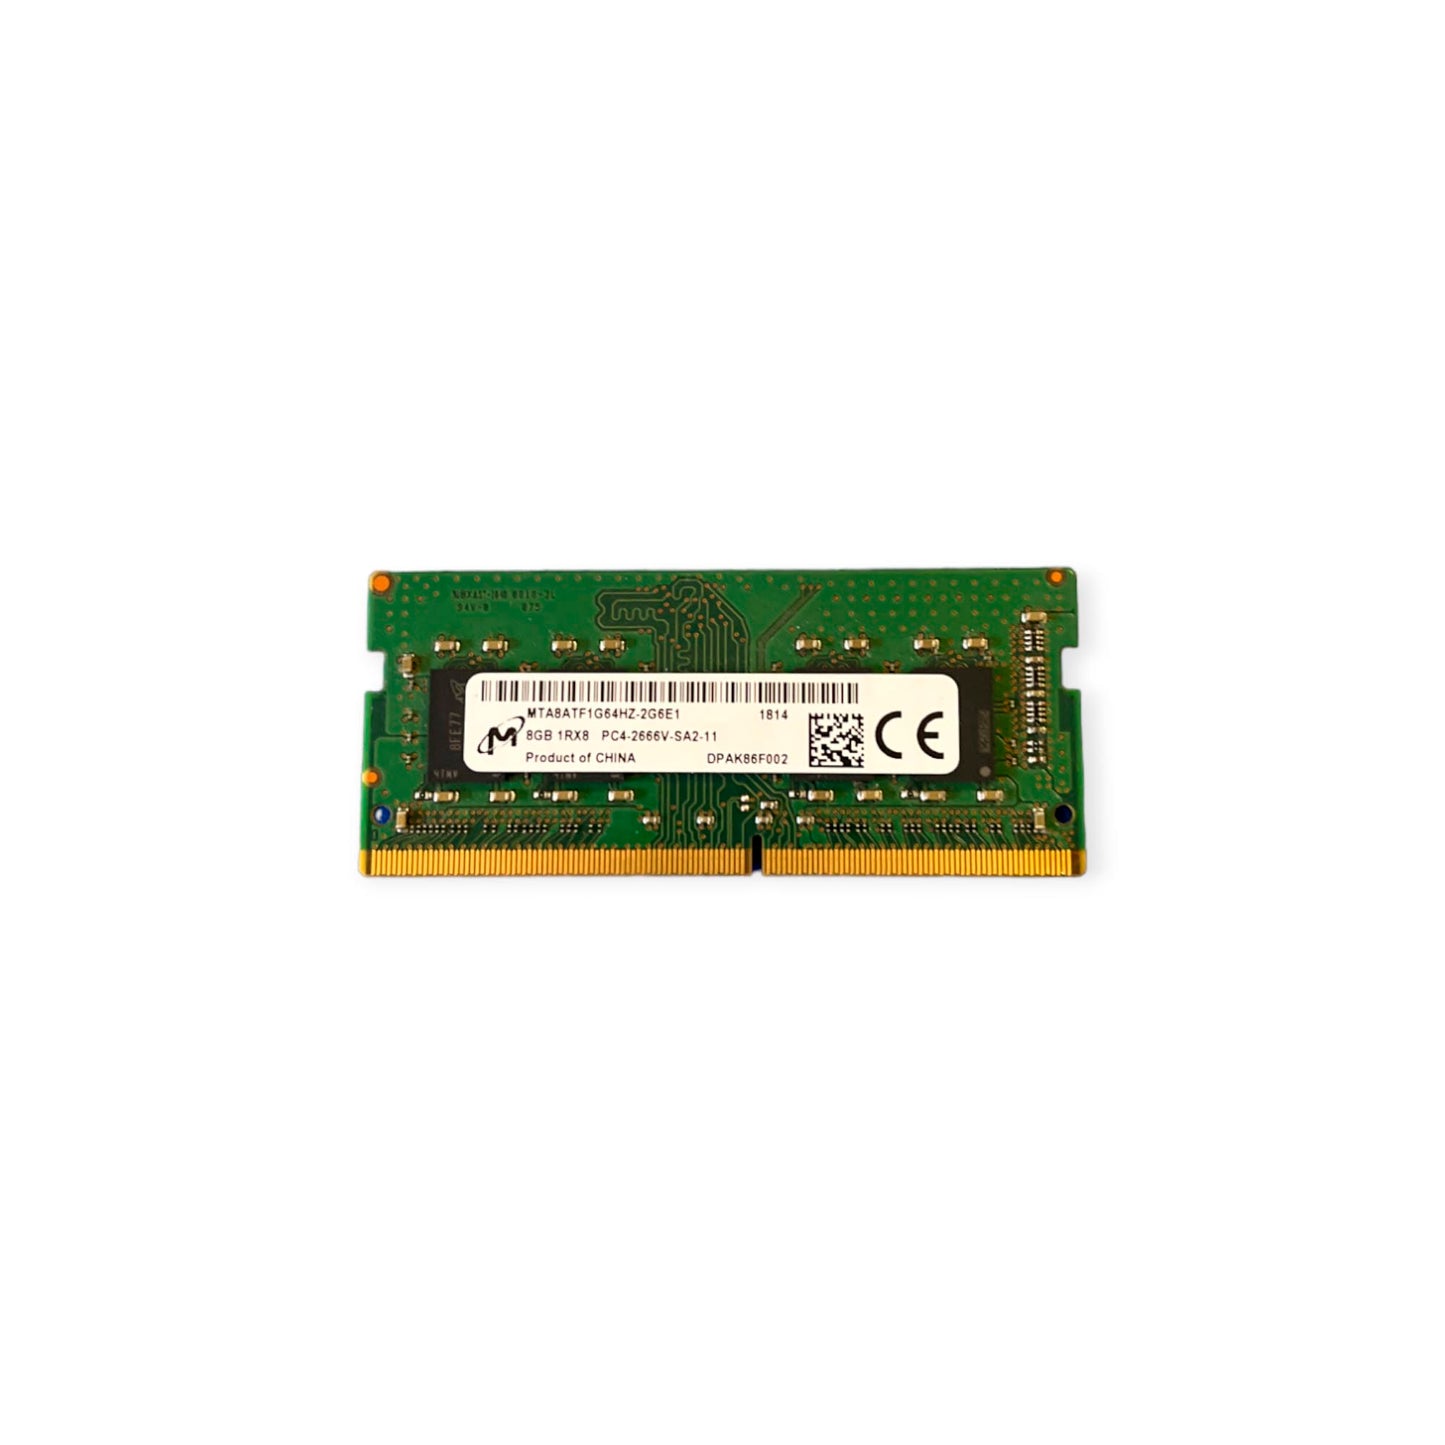 Memória Ram SO-DIMM Micron DDR4 8GB 2666Mhz MTA8ATF1G64HZ-2G6E1